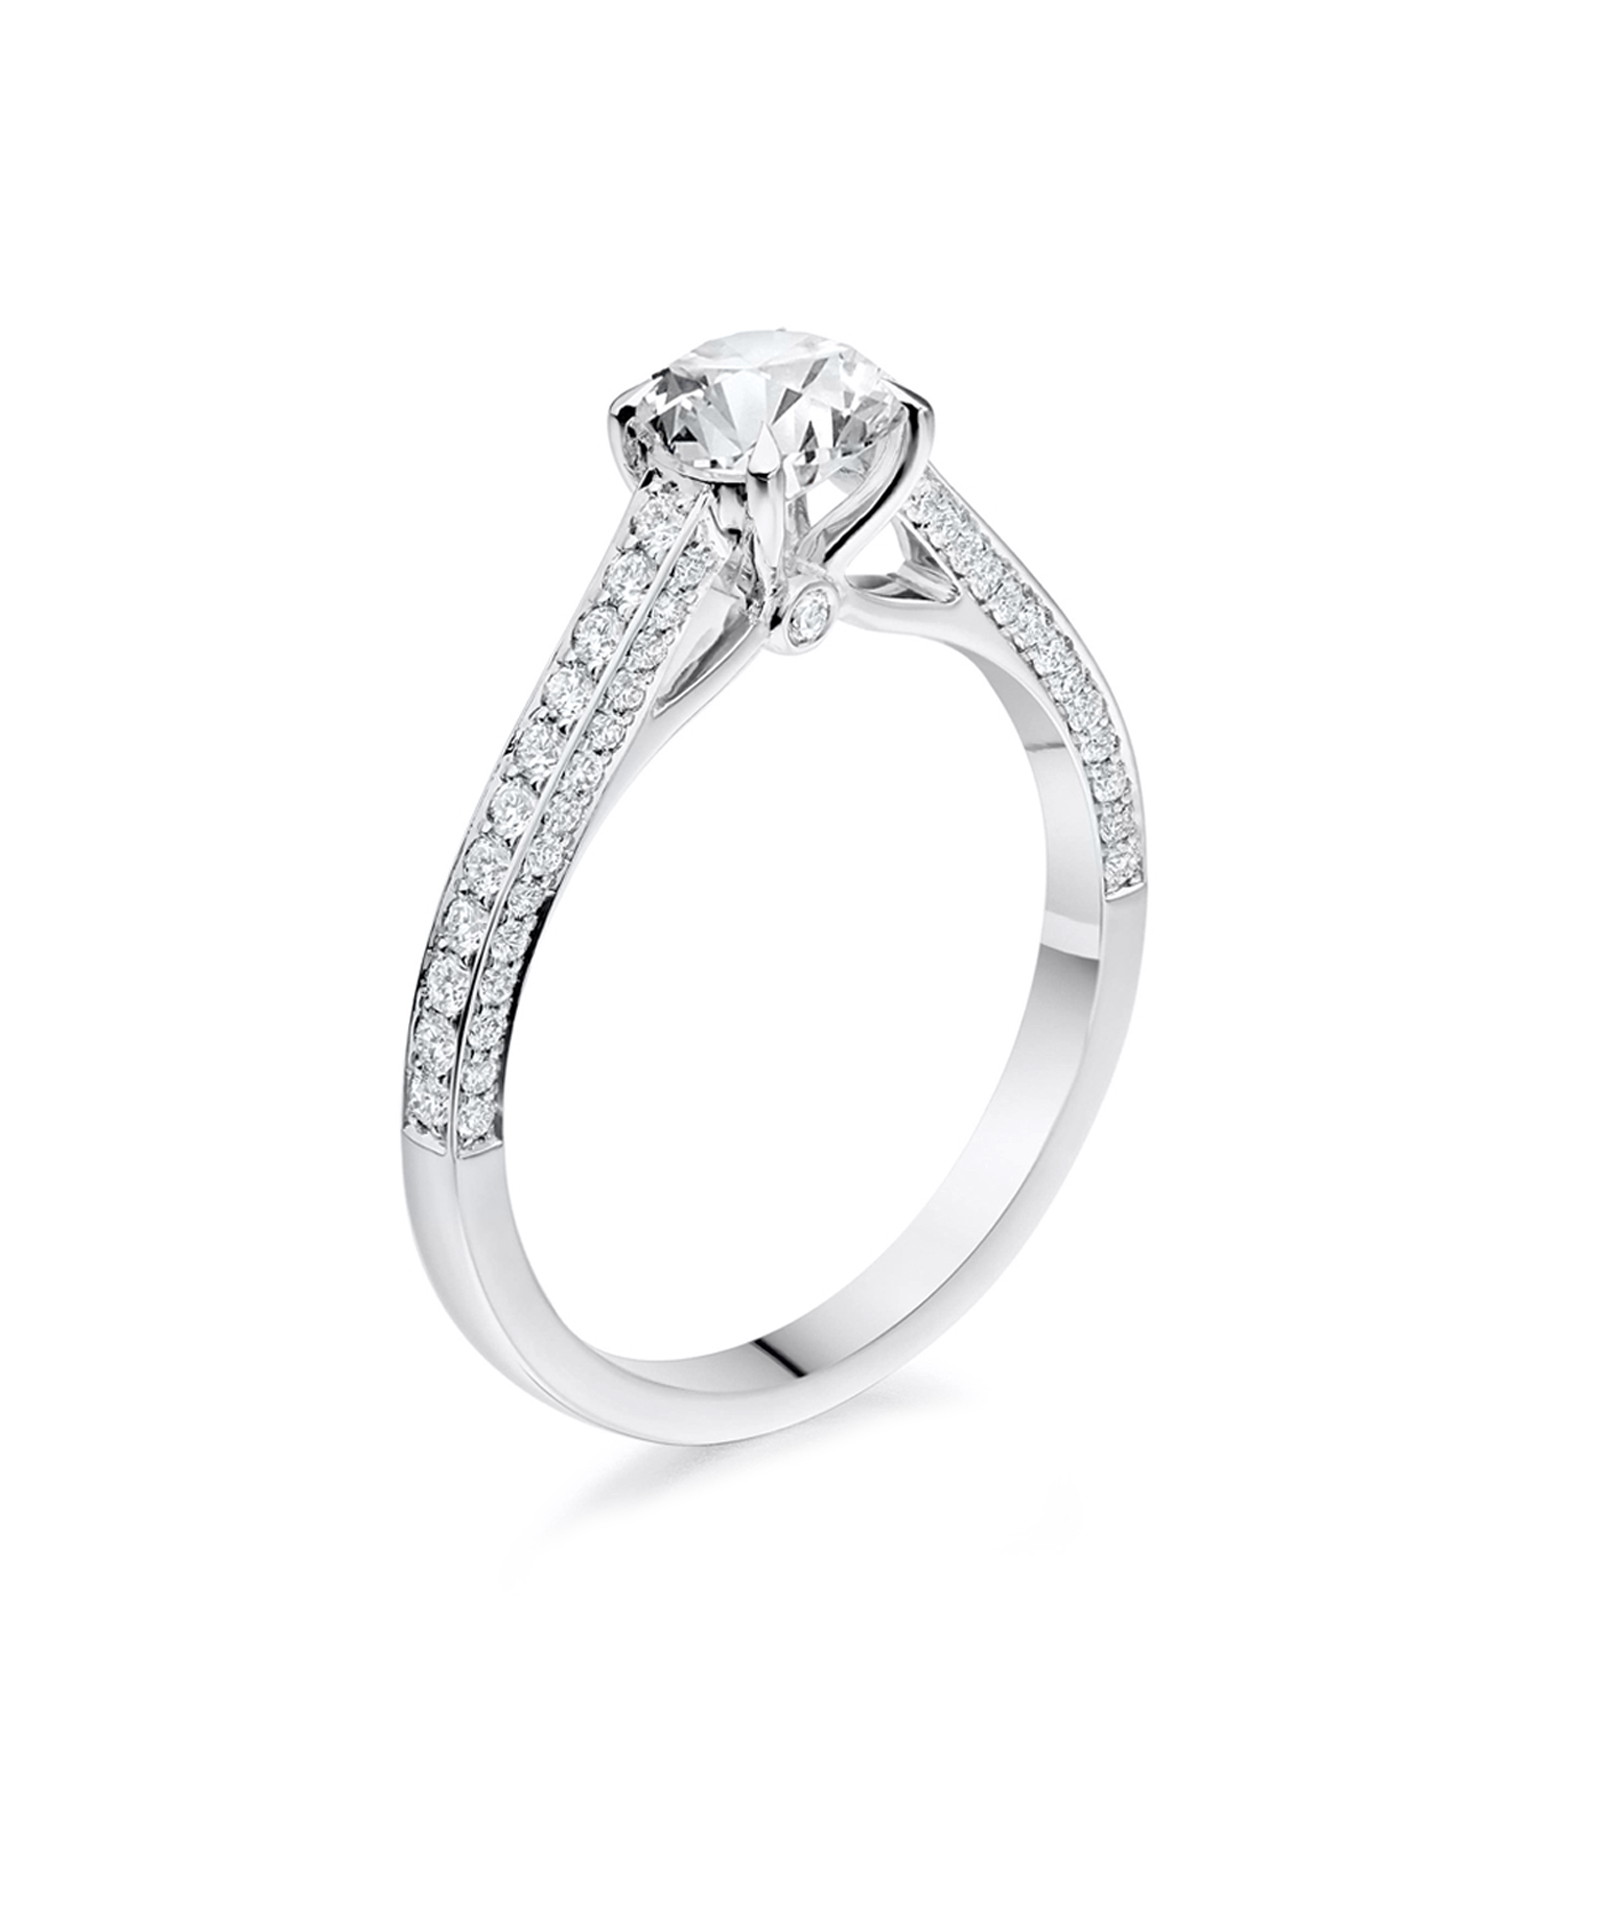 Luxury Round Brilliant Cut Diamond Engagement Ring - Phillip Stoner The Jeweller